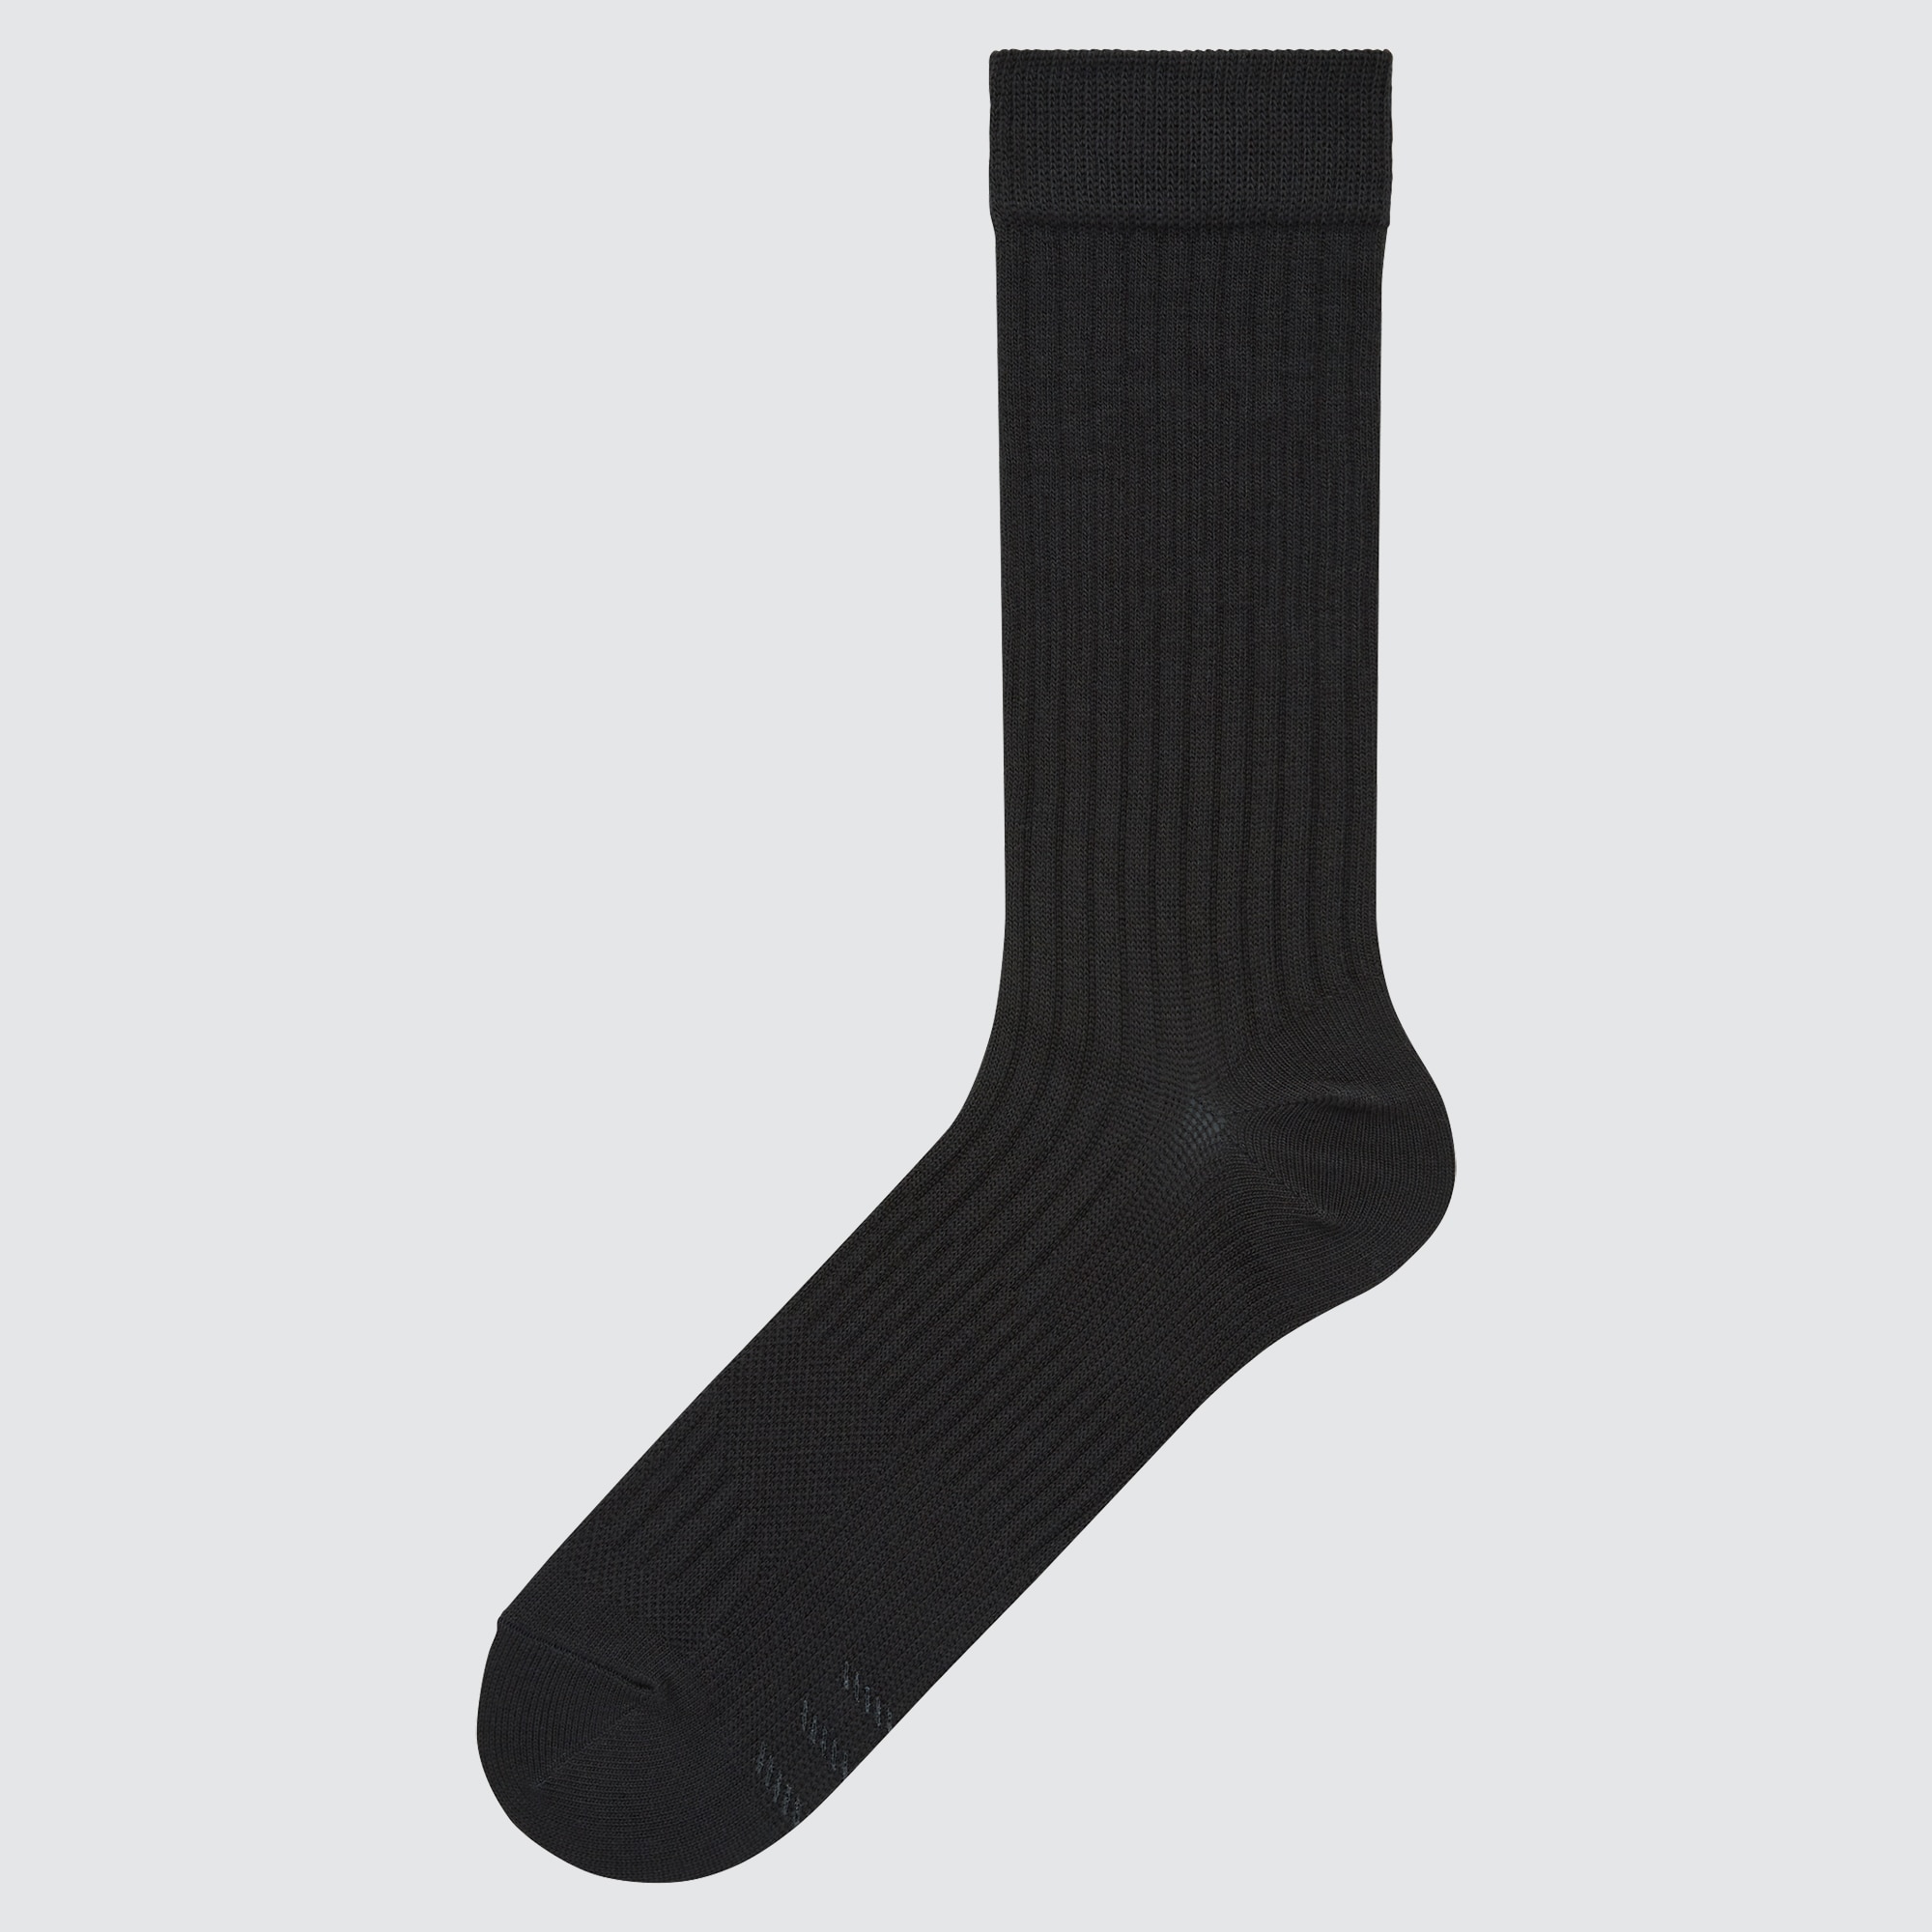 UNIQLO Colorful 50 Socks | StyleHint